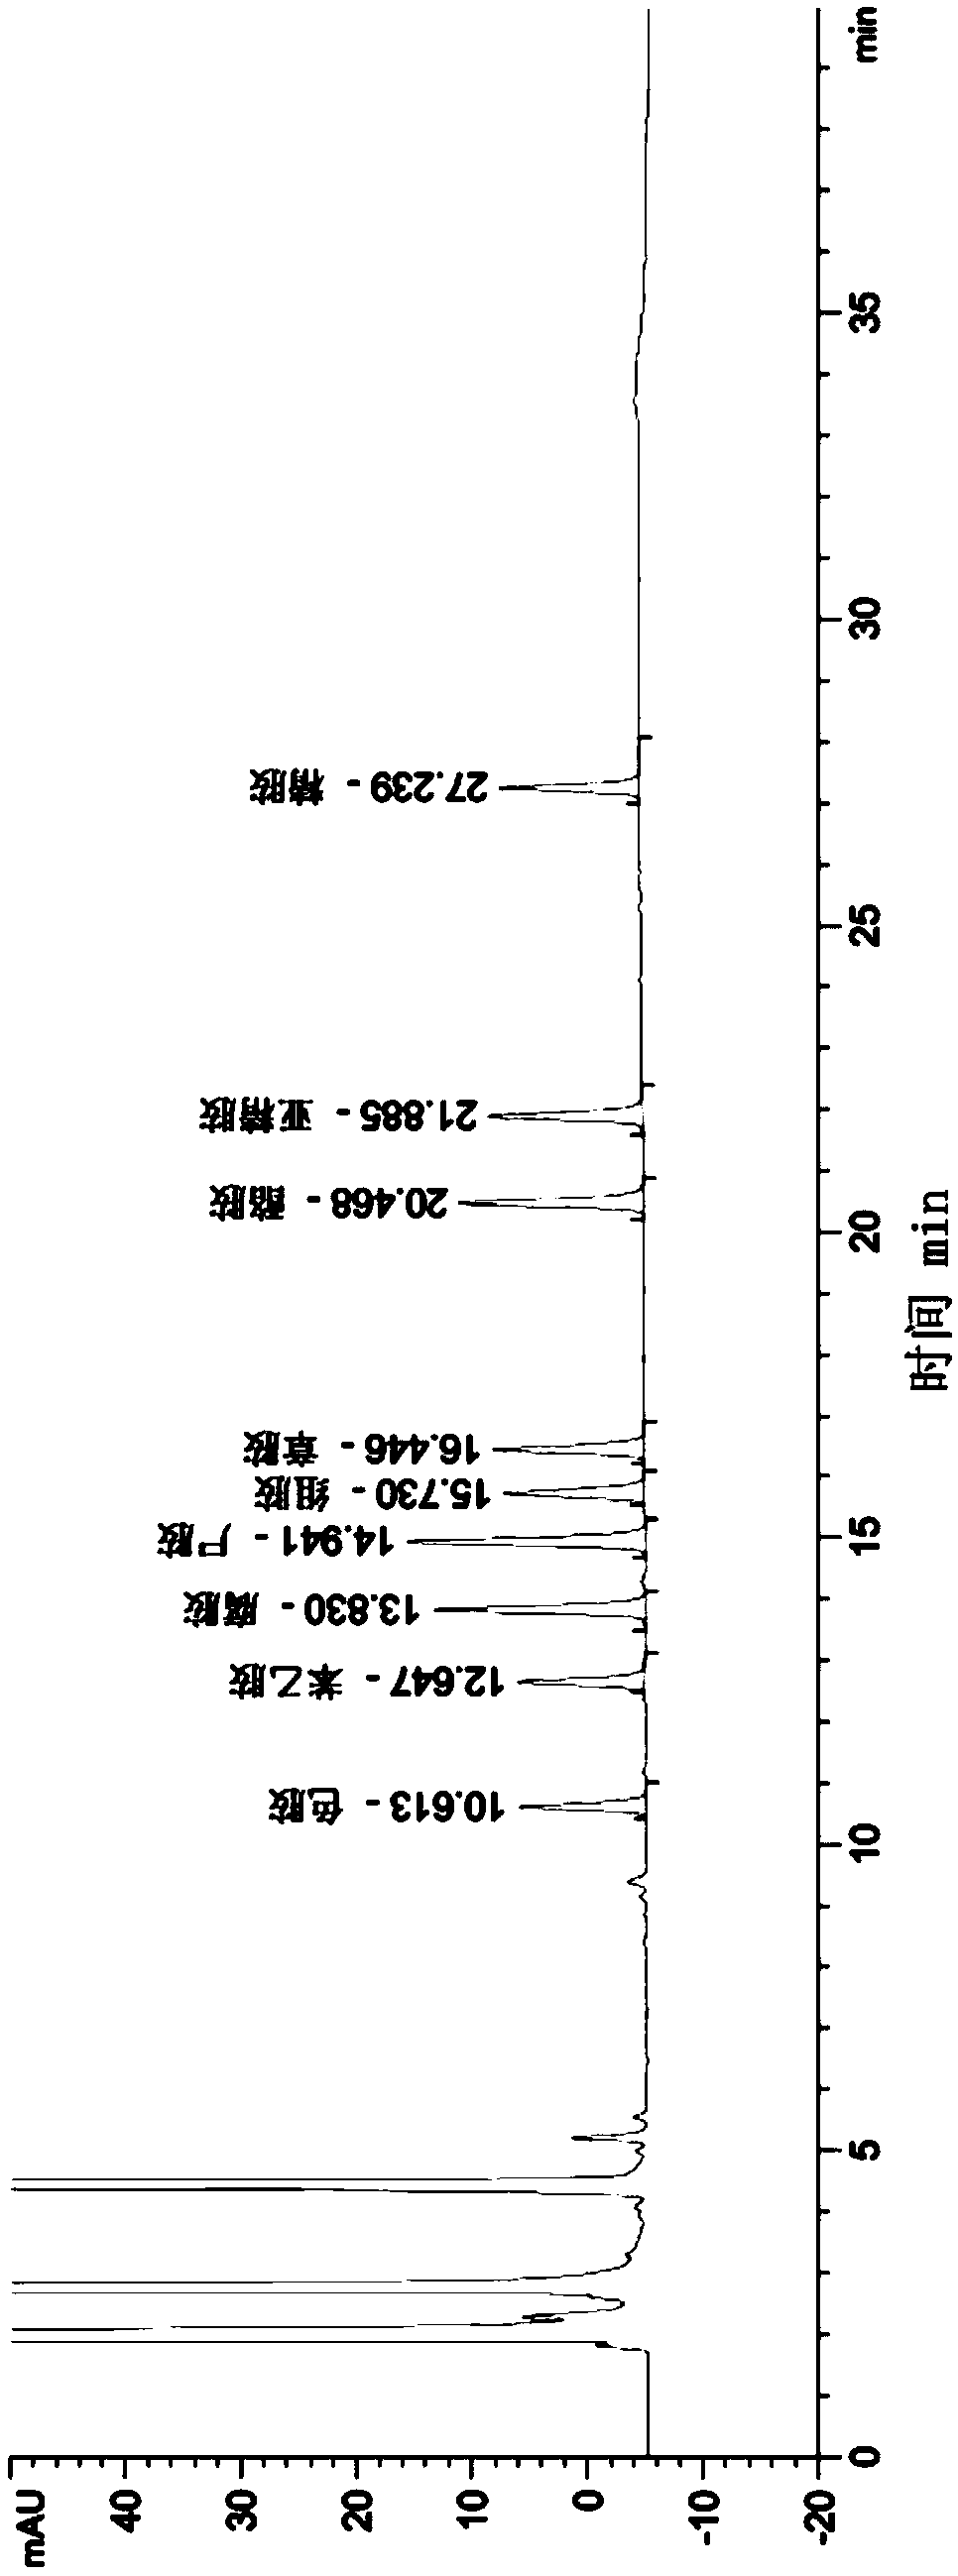 Method for testing biogenic amine in kudzu vine root